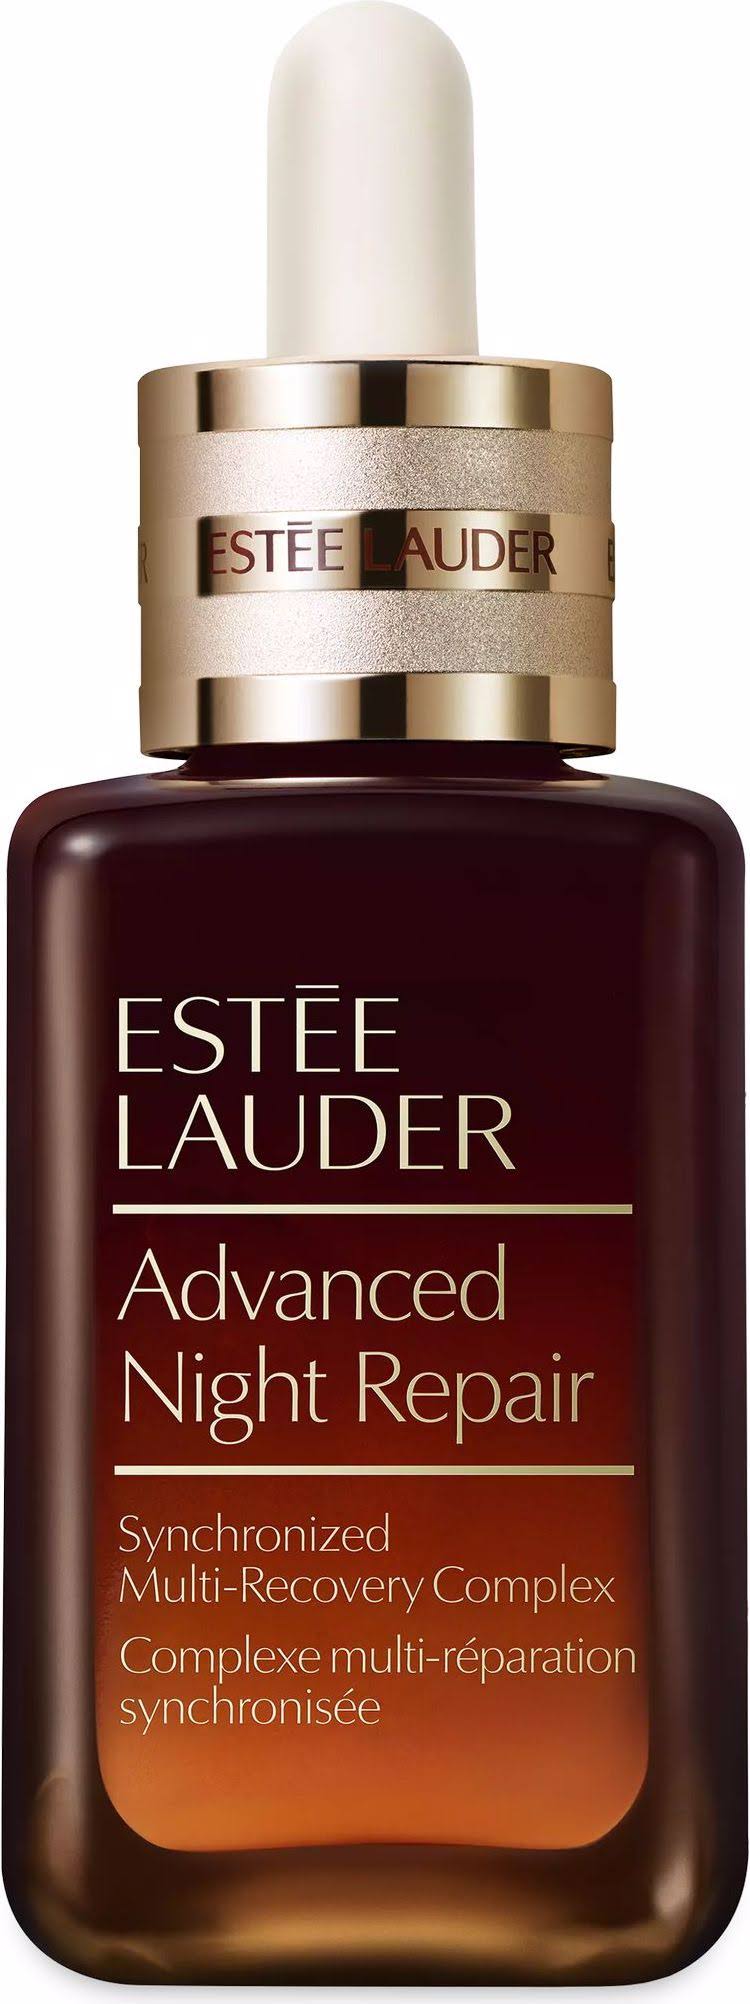 Estee Lauder Serum Advanced Night Repair Synchronized Multi-Recovery Complex 30ml